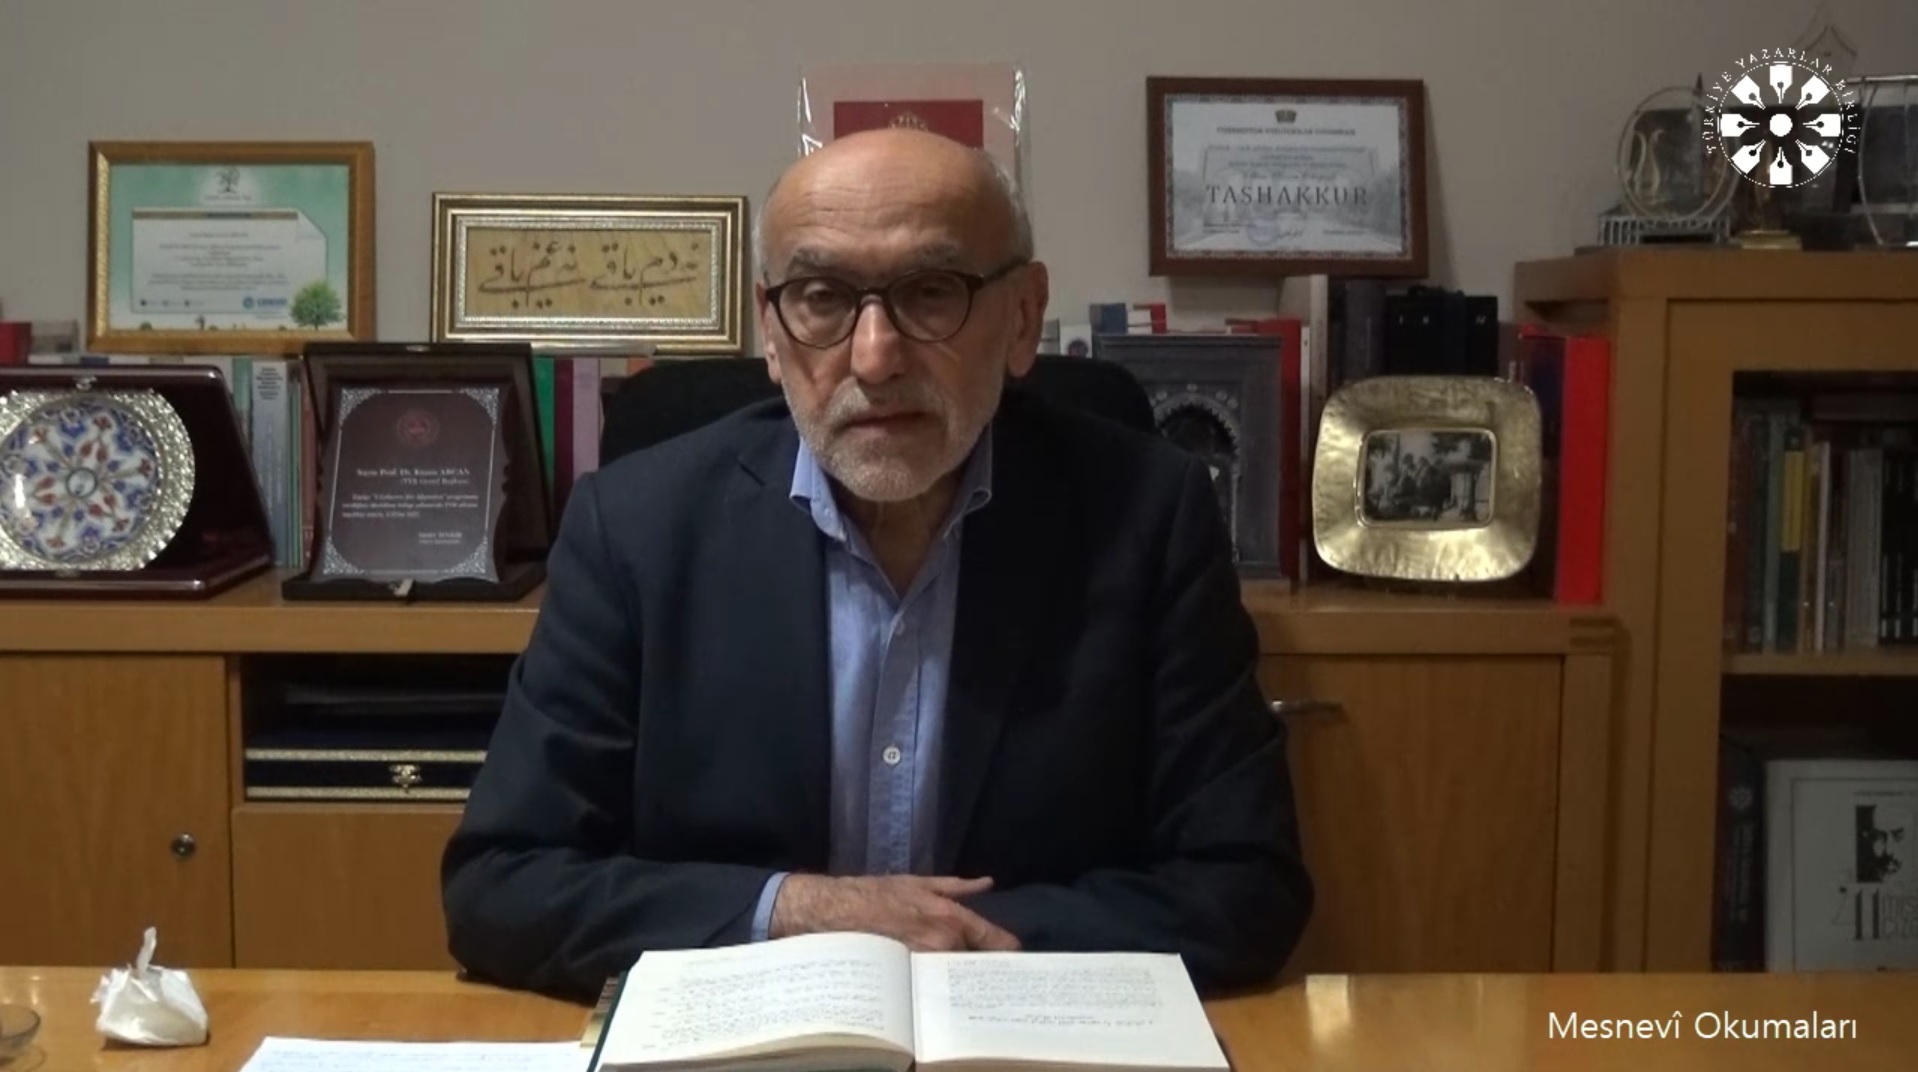 Mesnevî Okumaları -192- Dr. Halil İbrahim Sarıoğlu